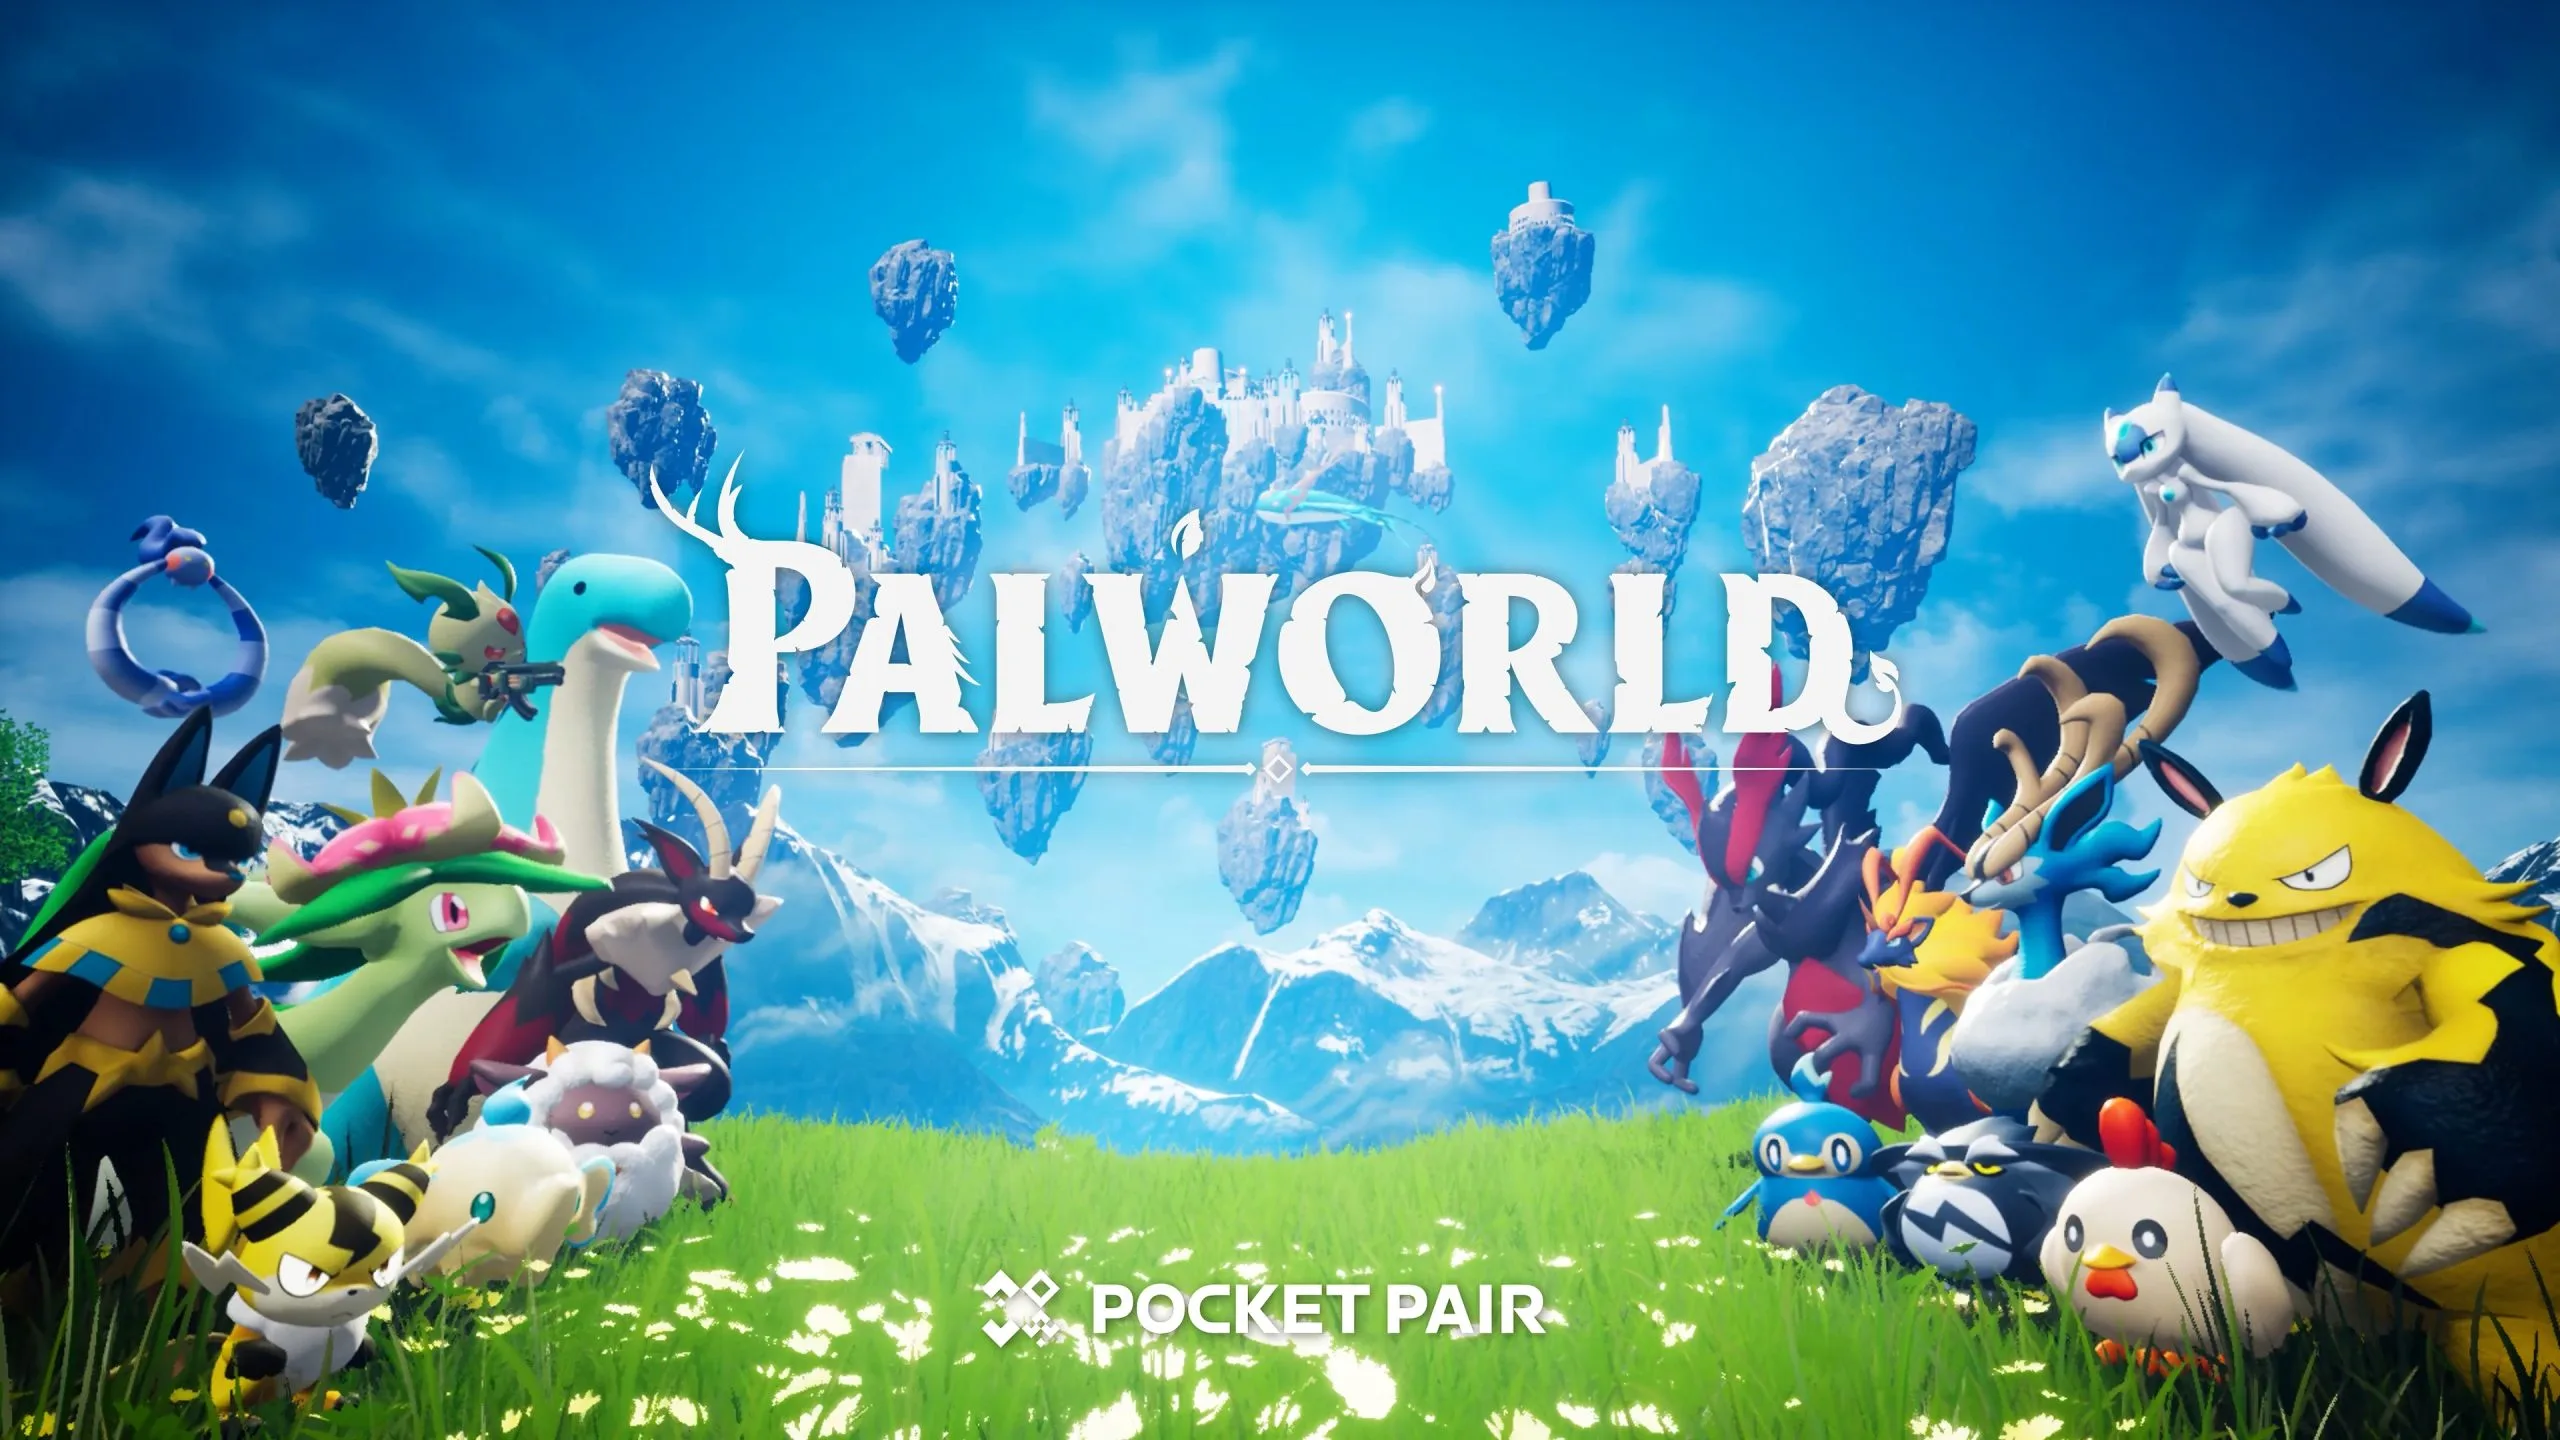 Palworld Free Download SteamGG.net